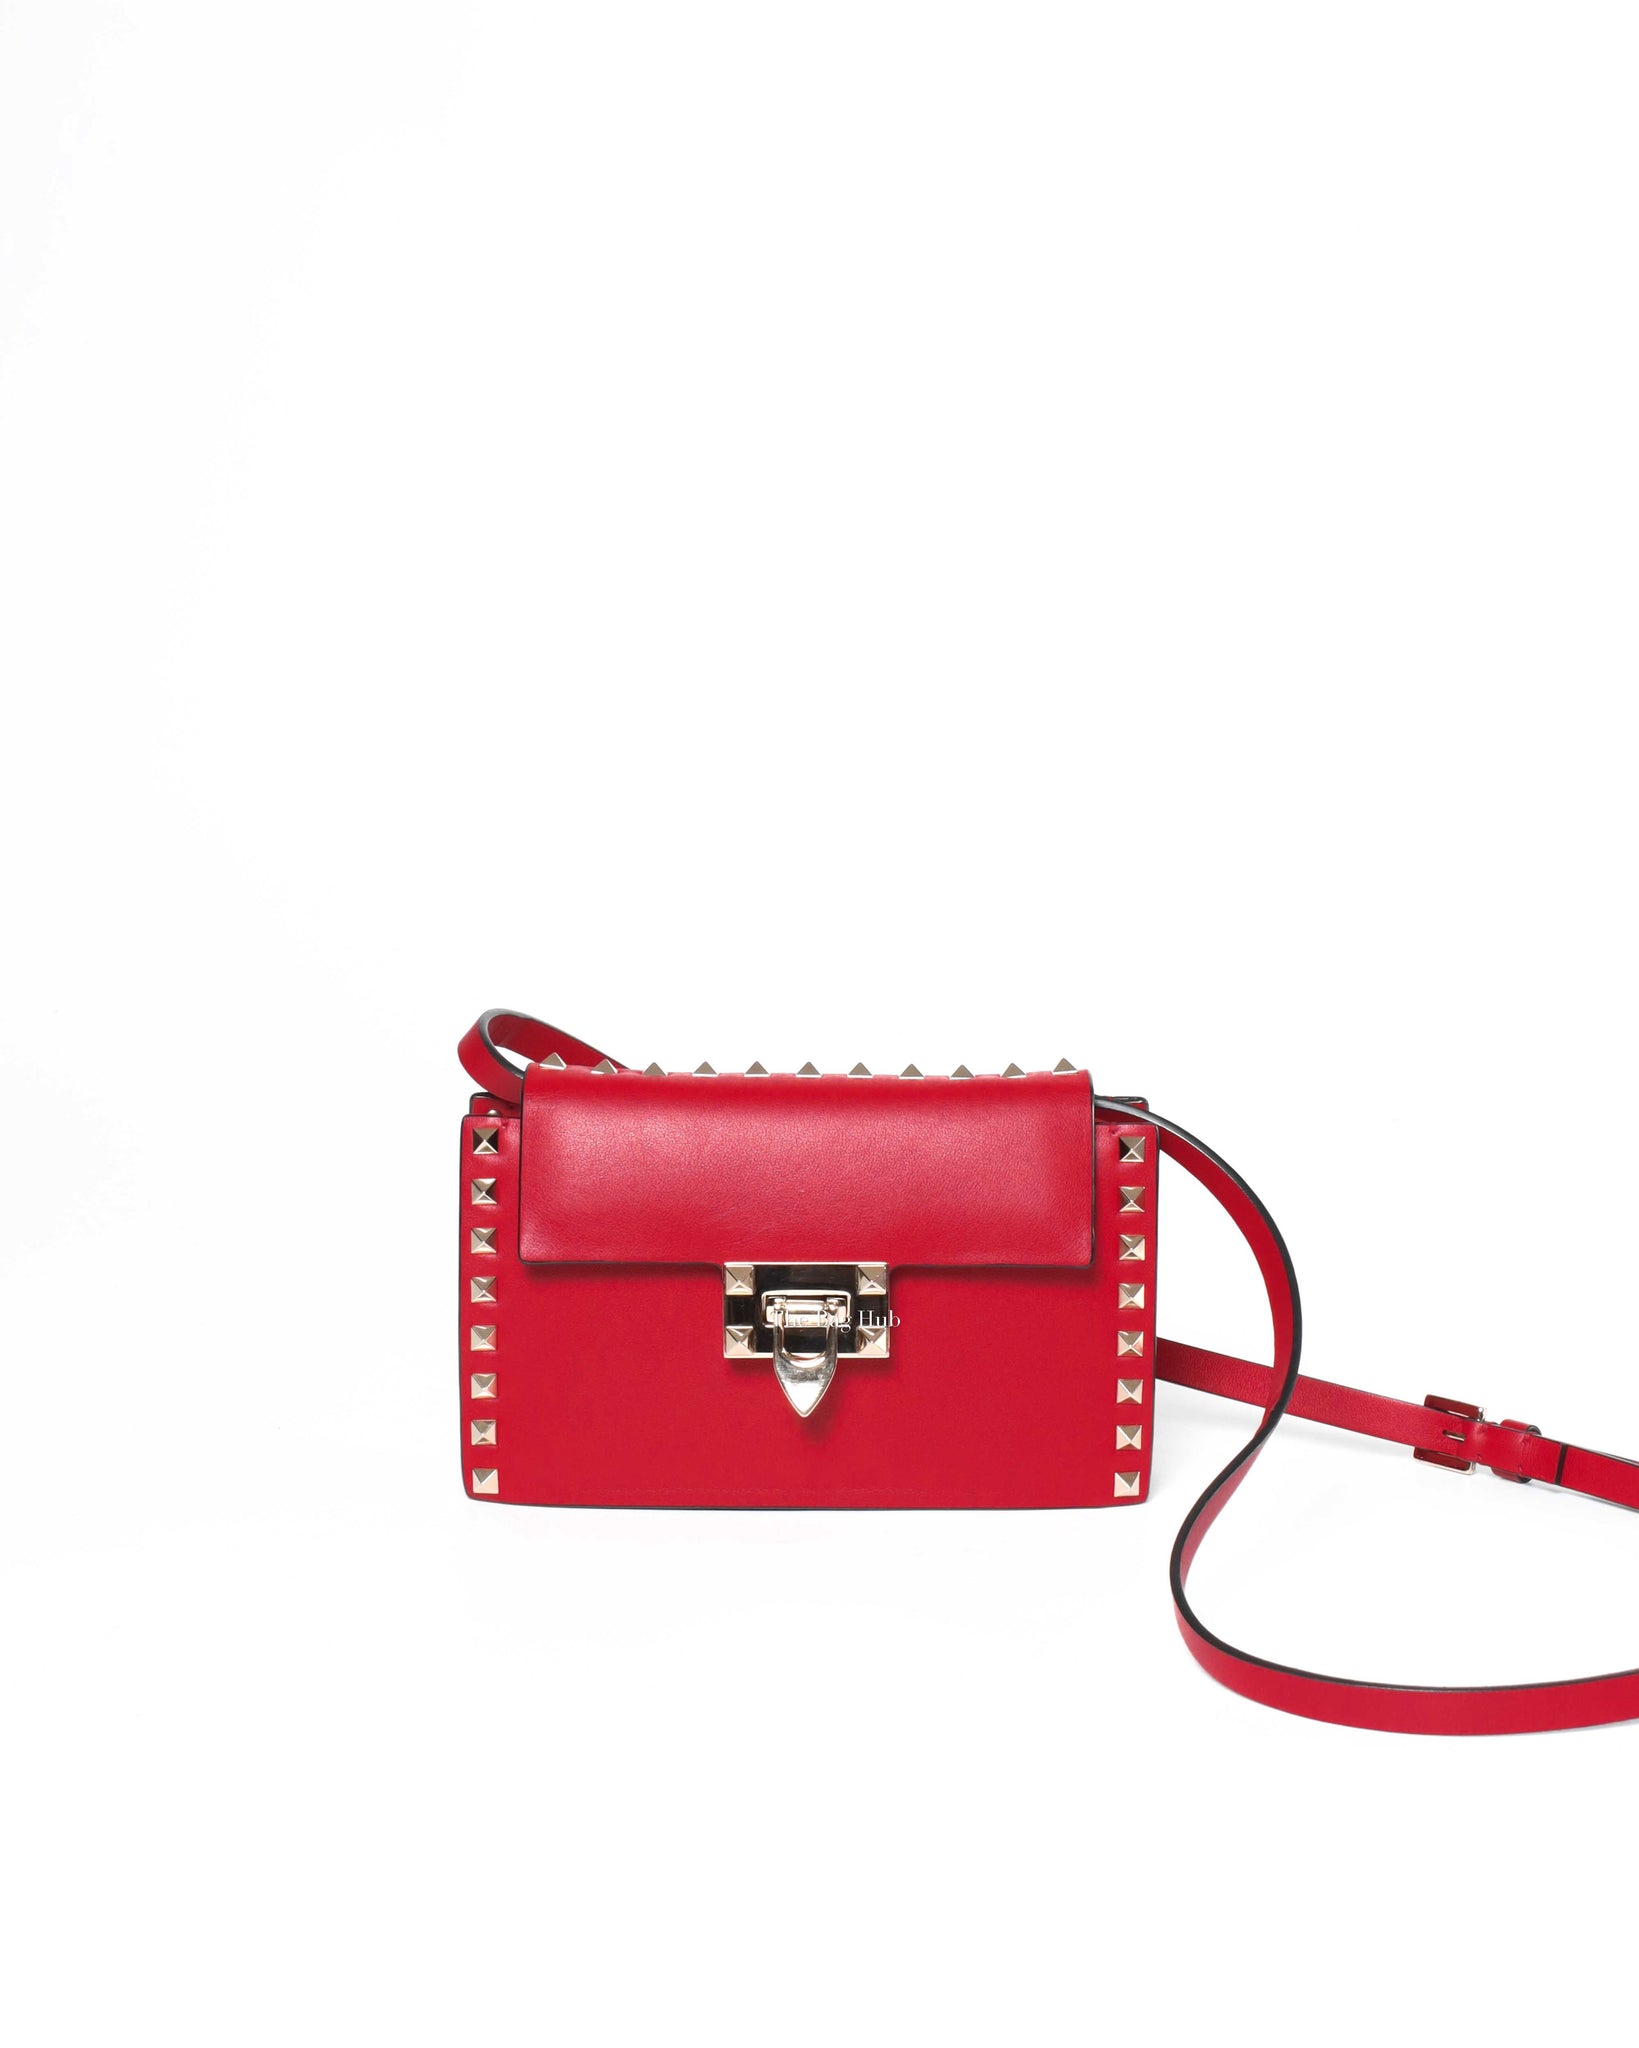 Valentino Garavani Red Leather Rockstud Sling Bag-2